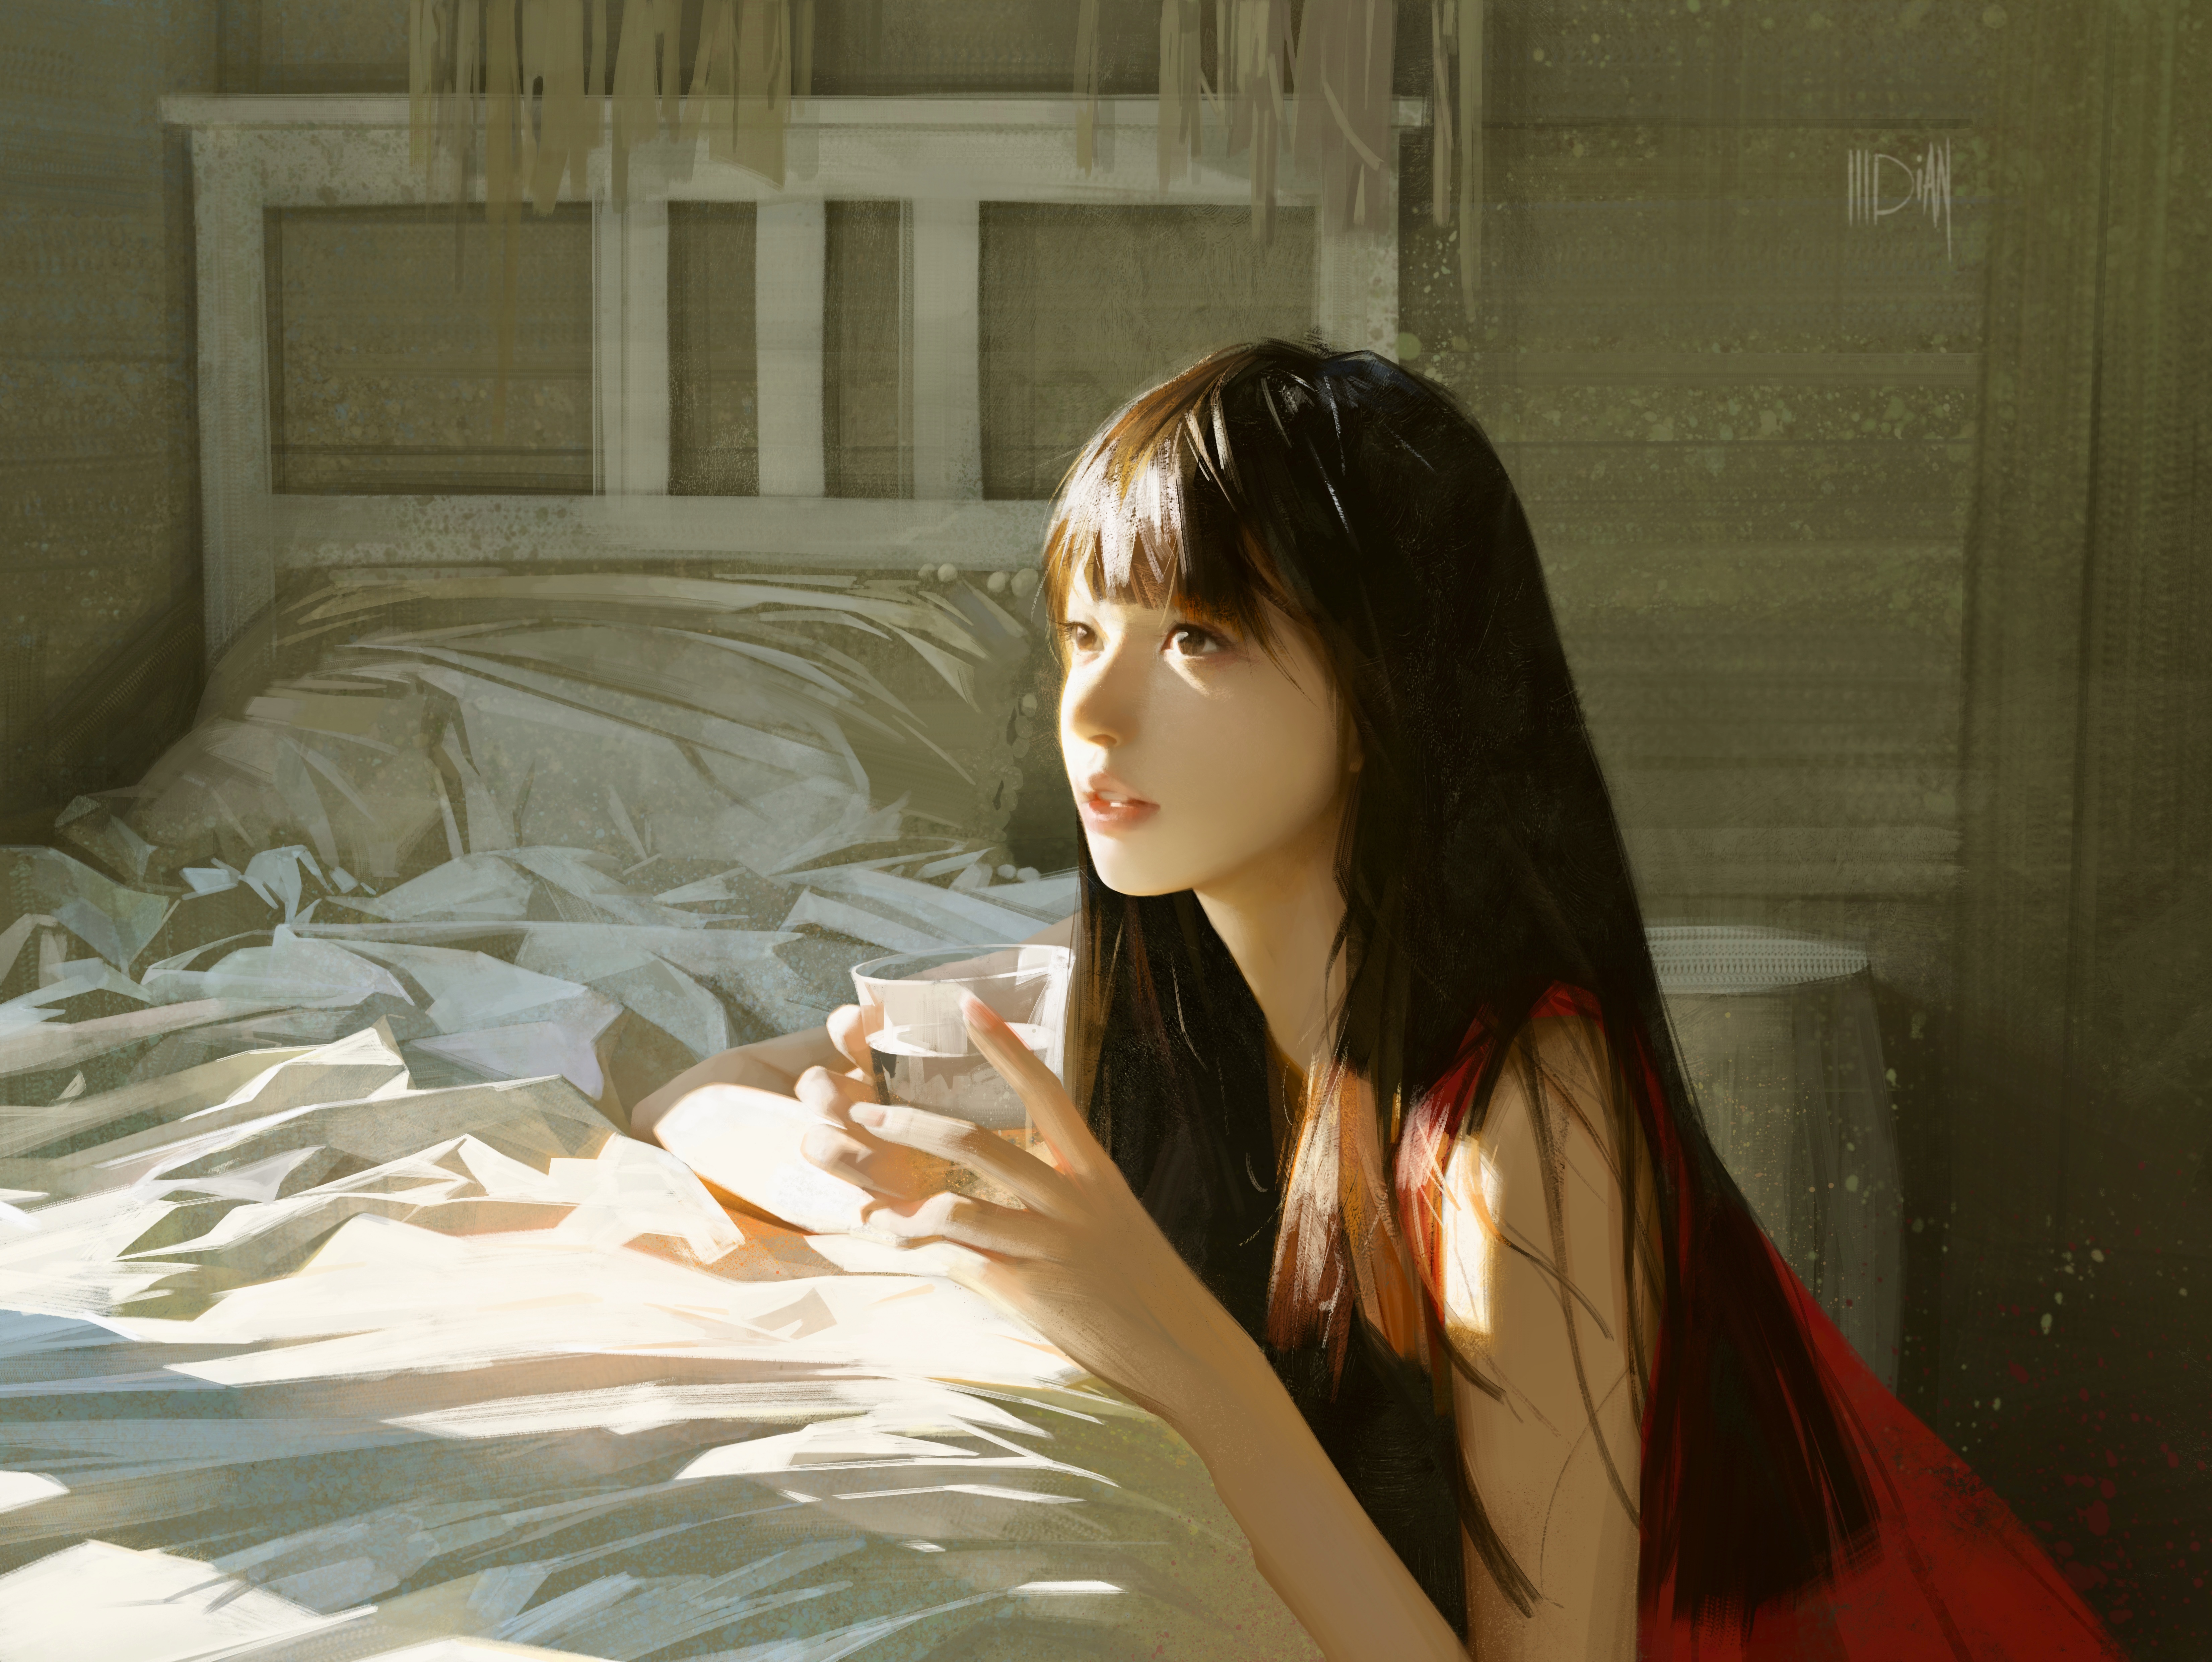 General 6604x4961 ILLDIAN digital art artwork illustration painting women long hair dark hair bed room indoors sunlight Asian looking away